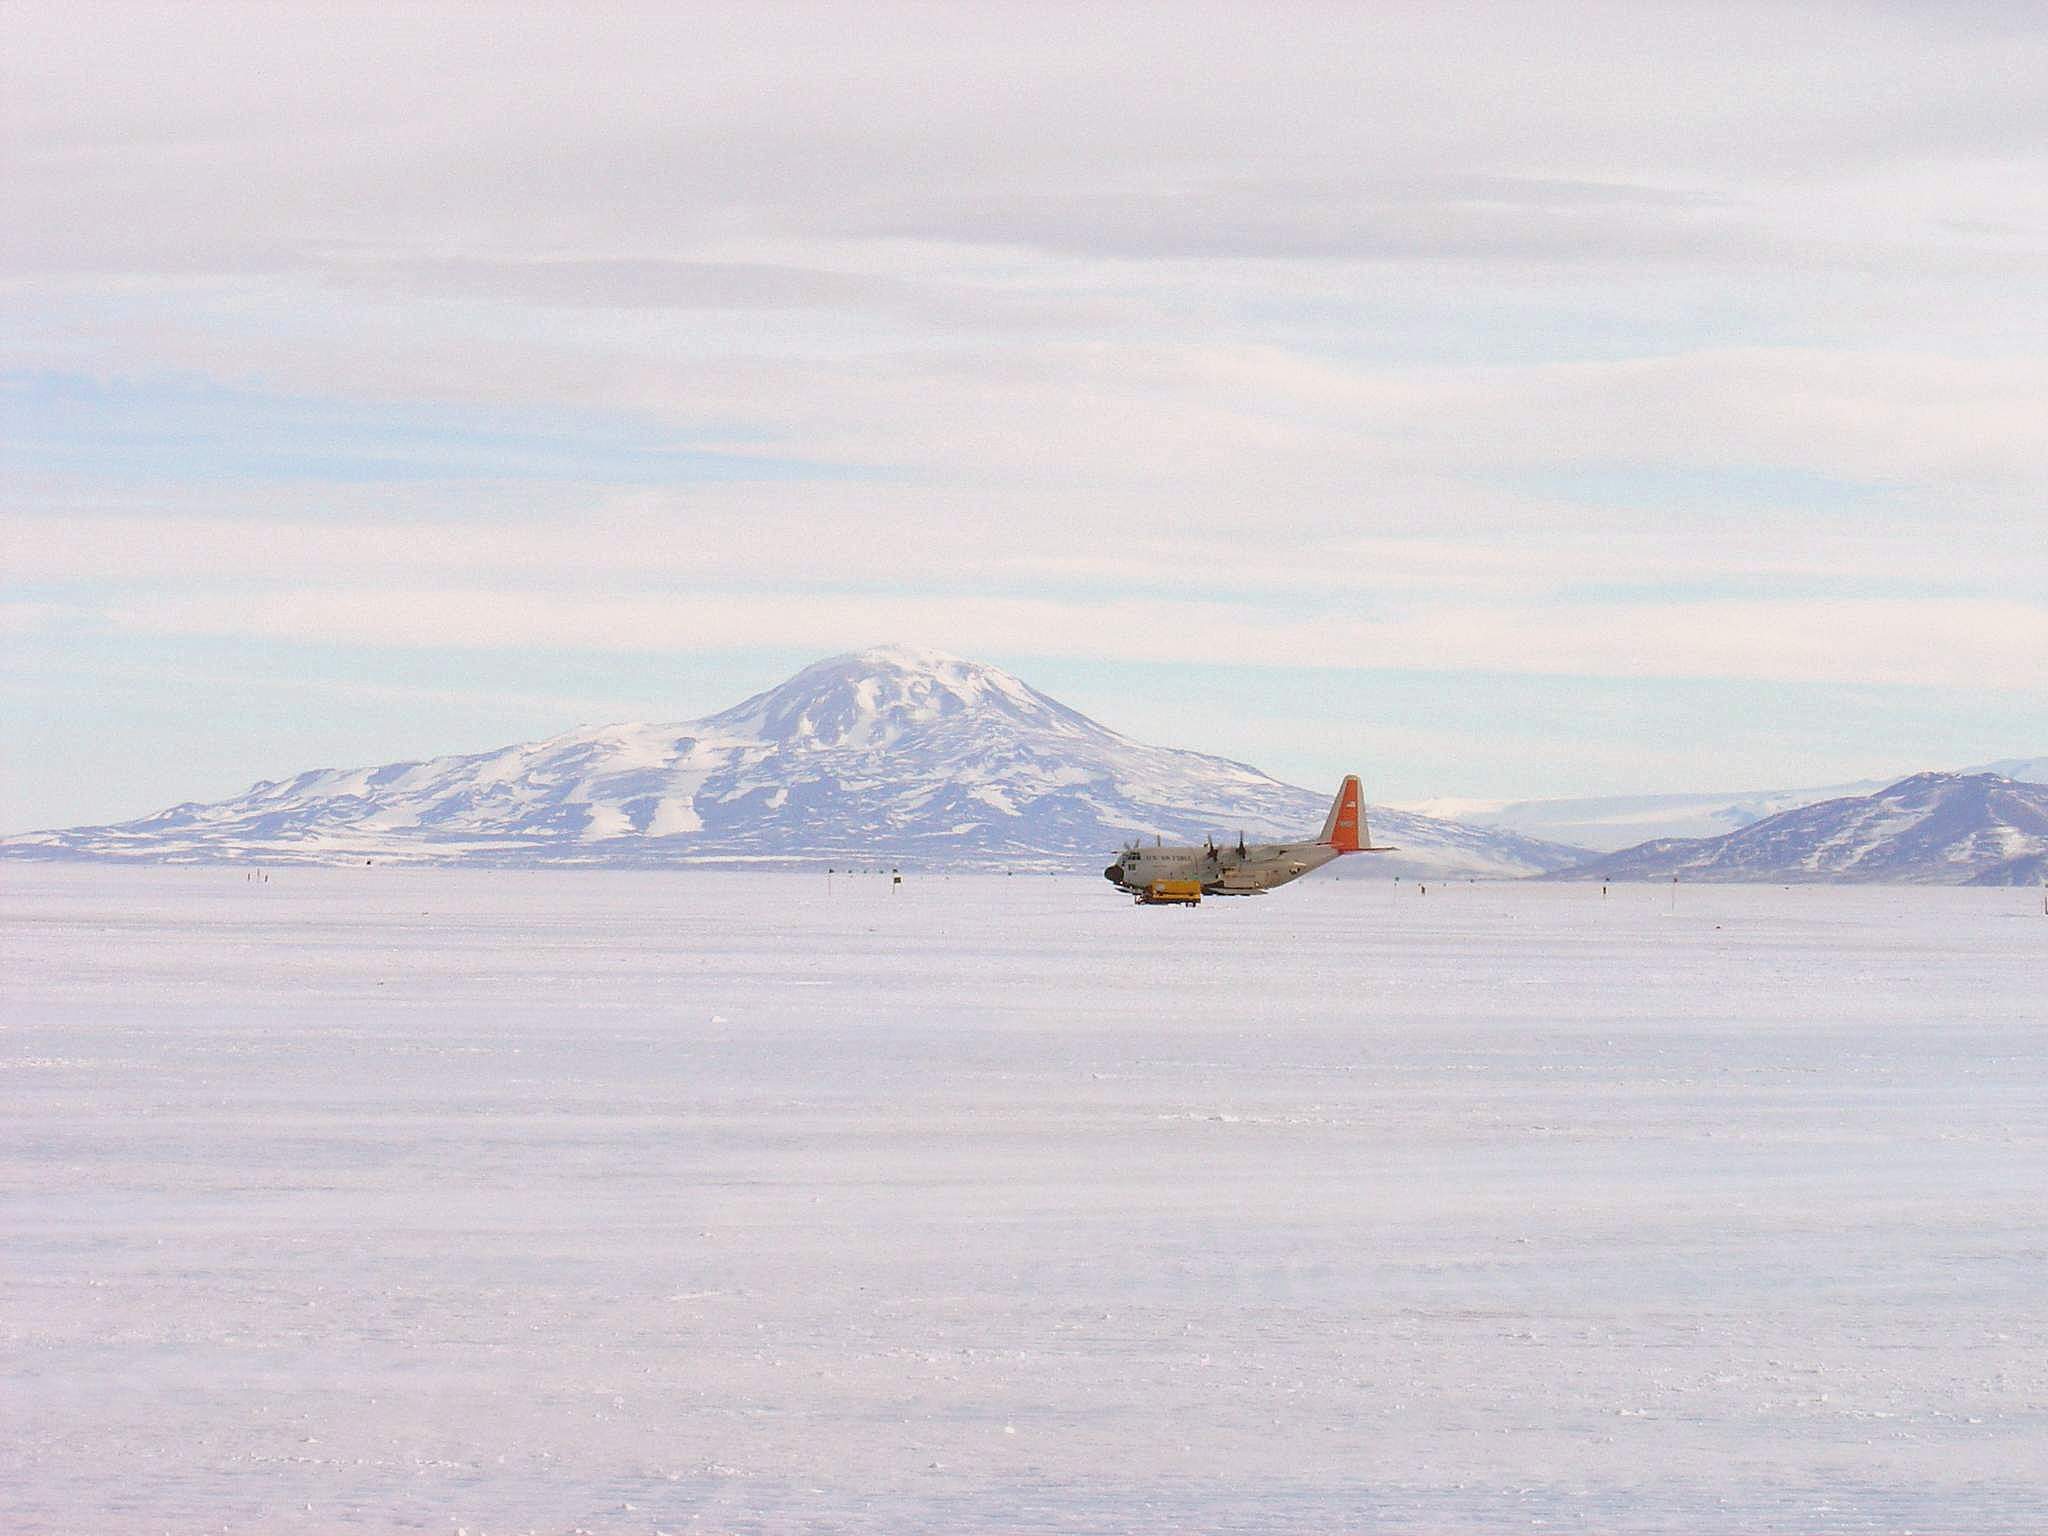 McMurdo runway